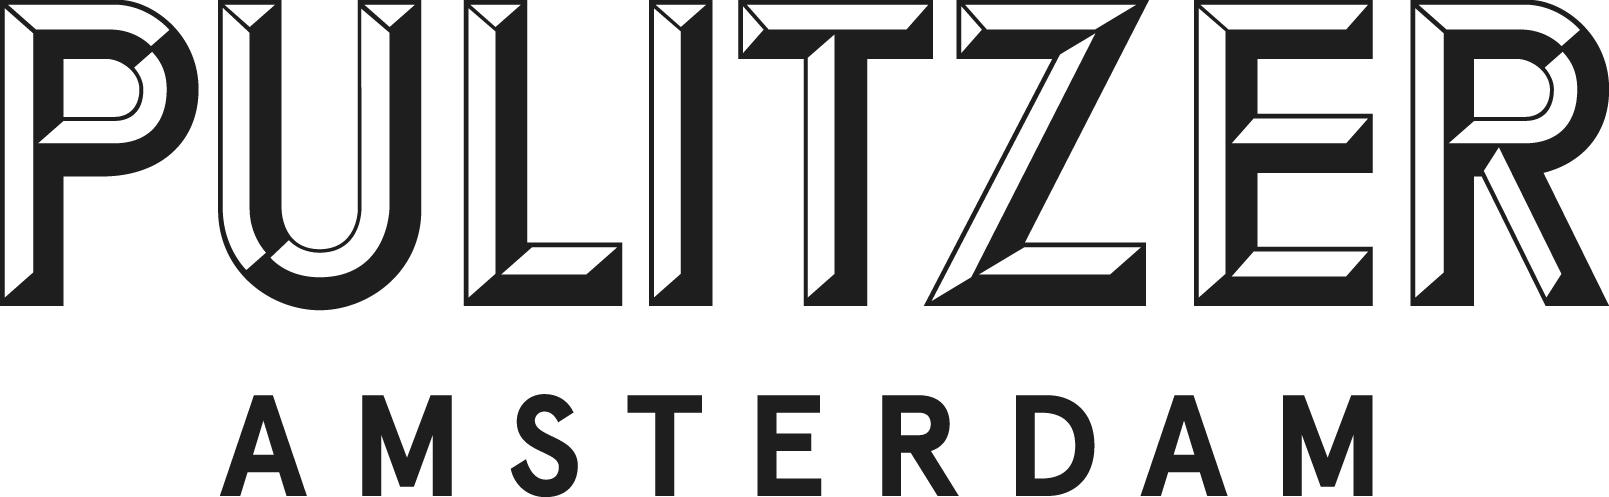 Pulitzer Amsterdam Logo